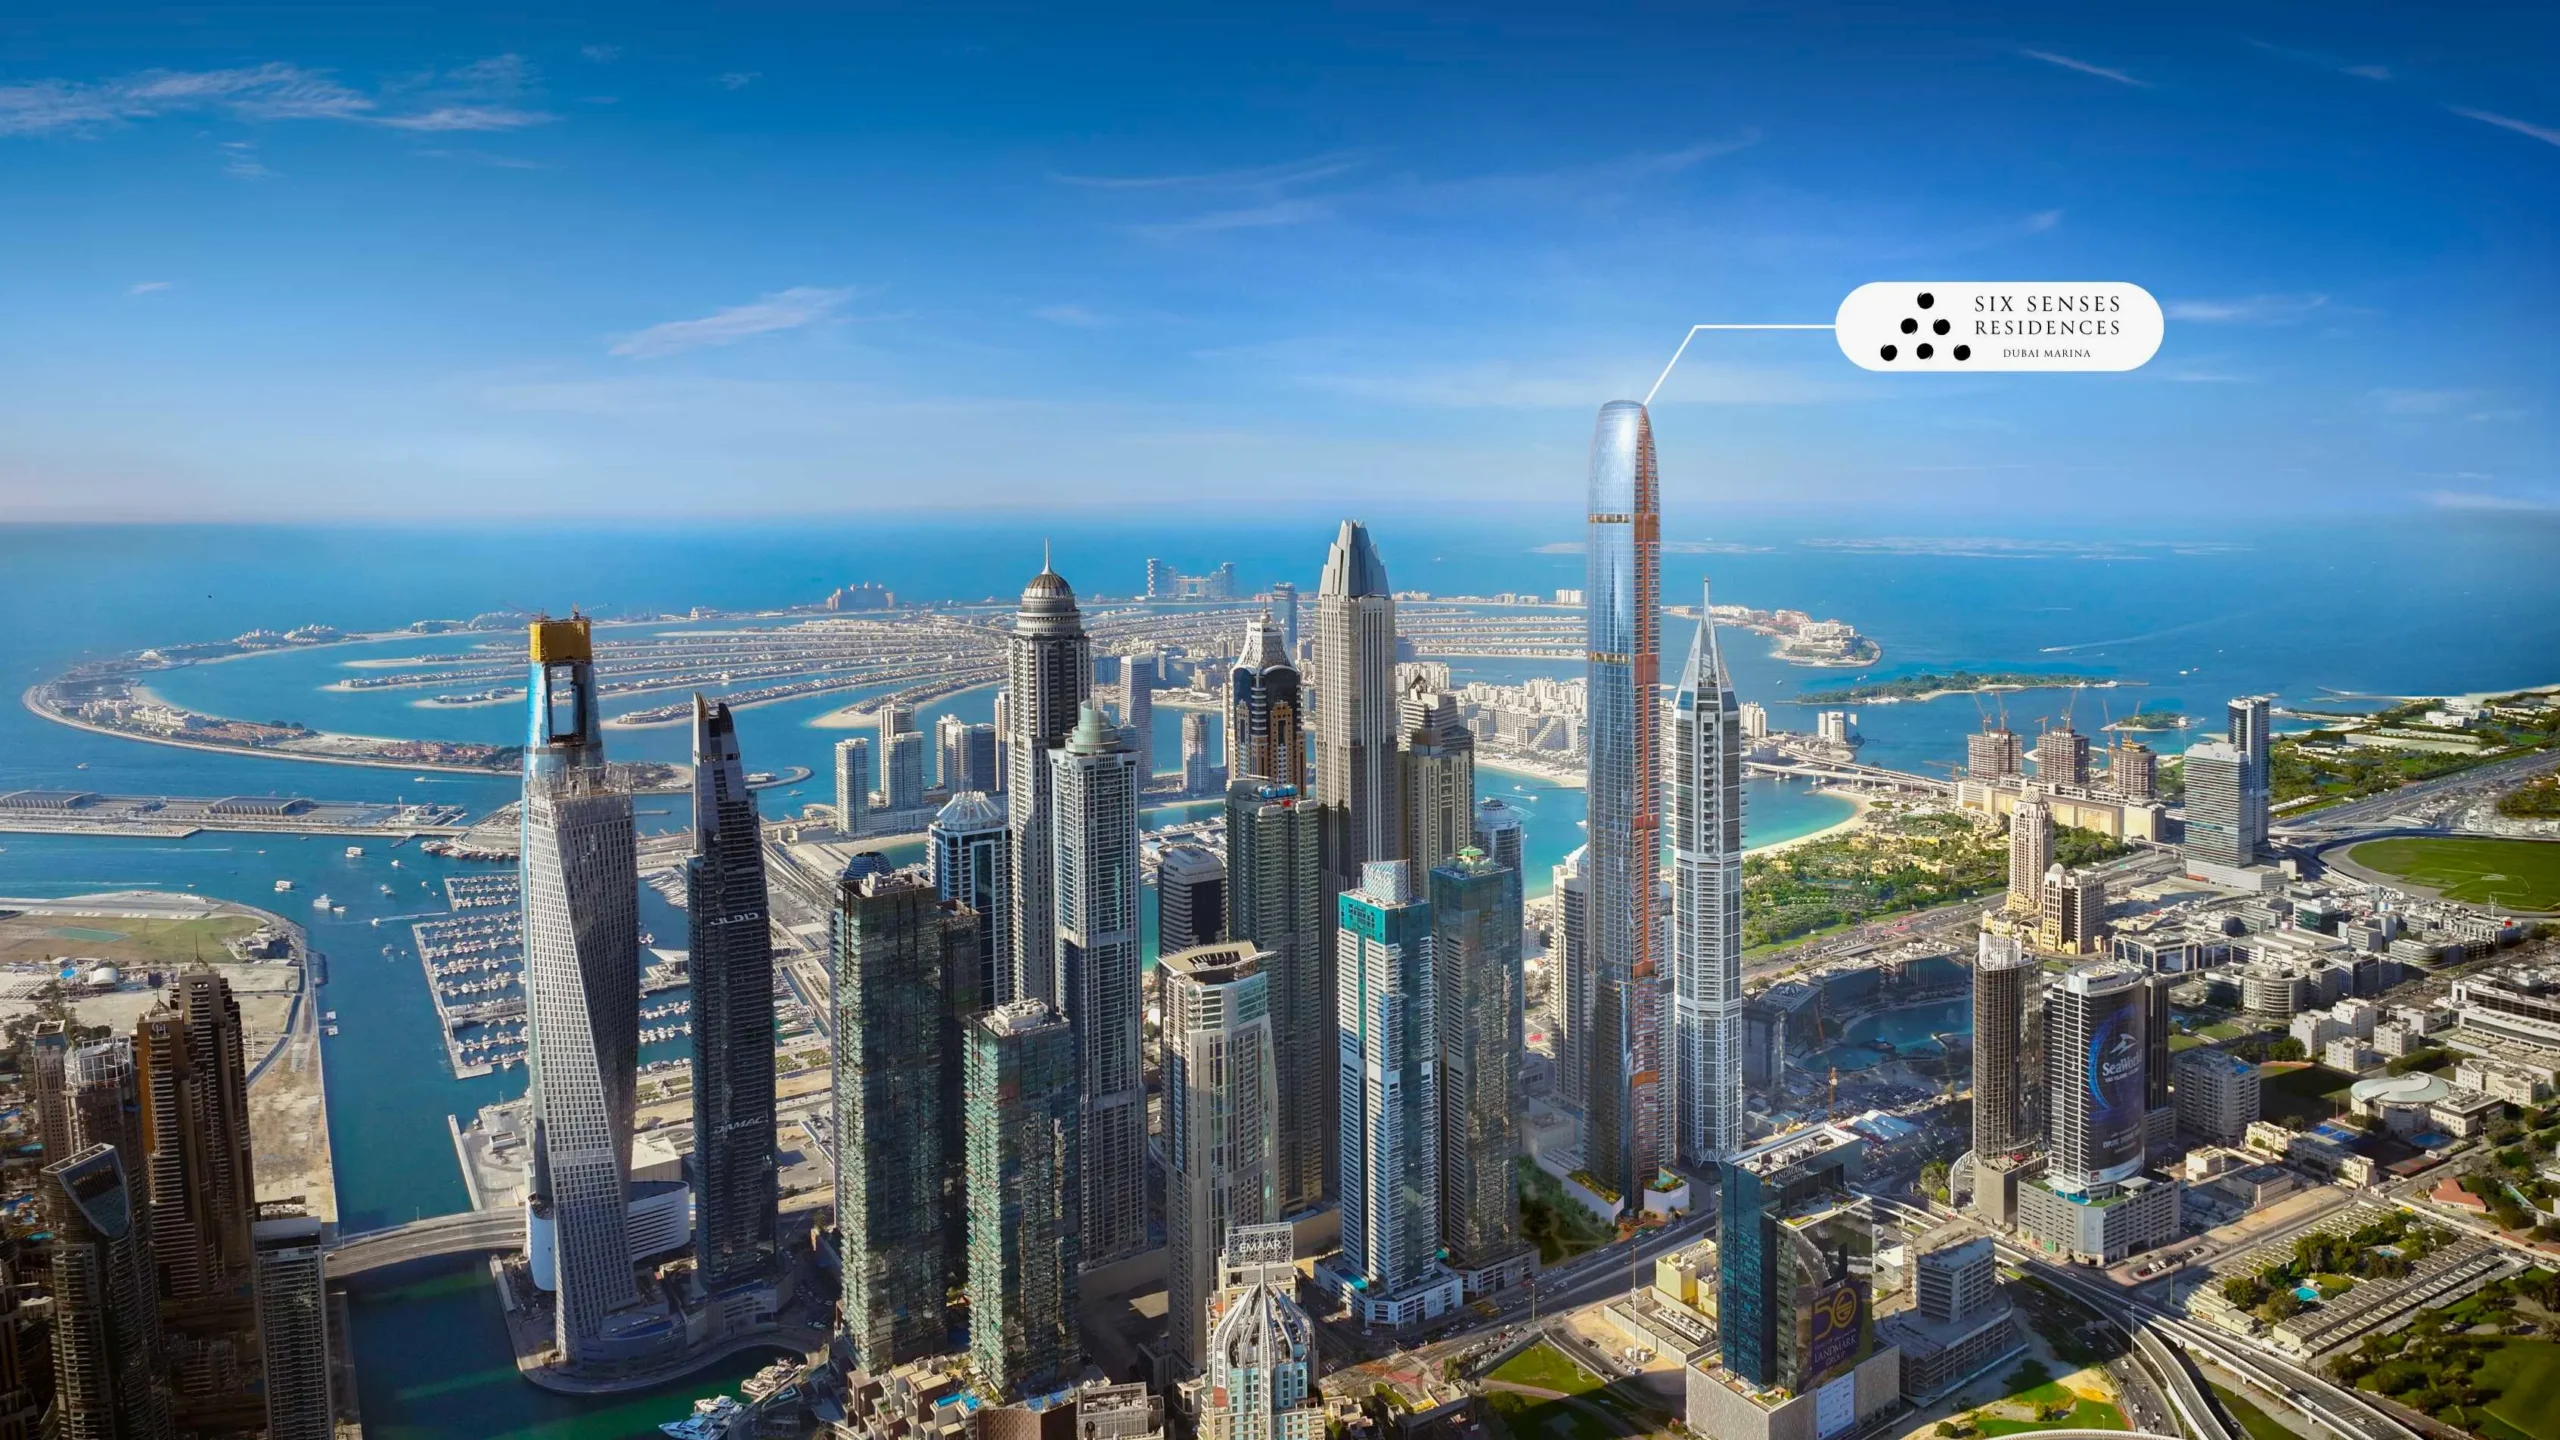 Six Senses Residences at Dubai Marina by Select Group